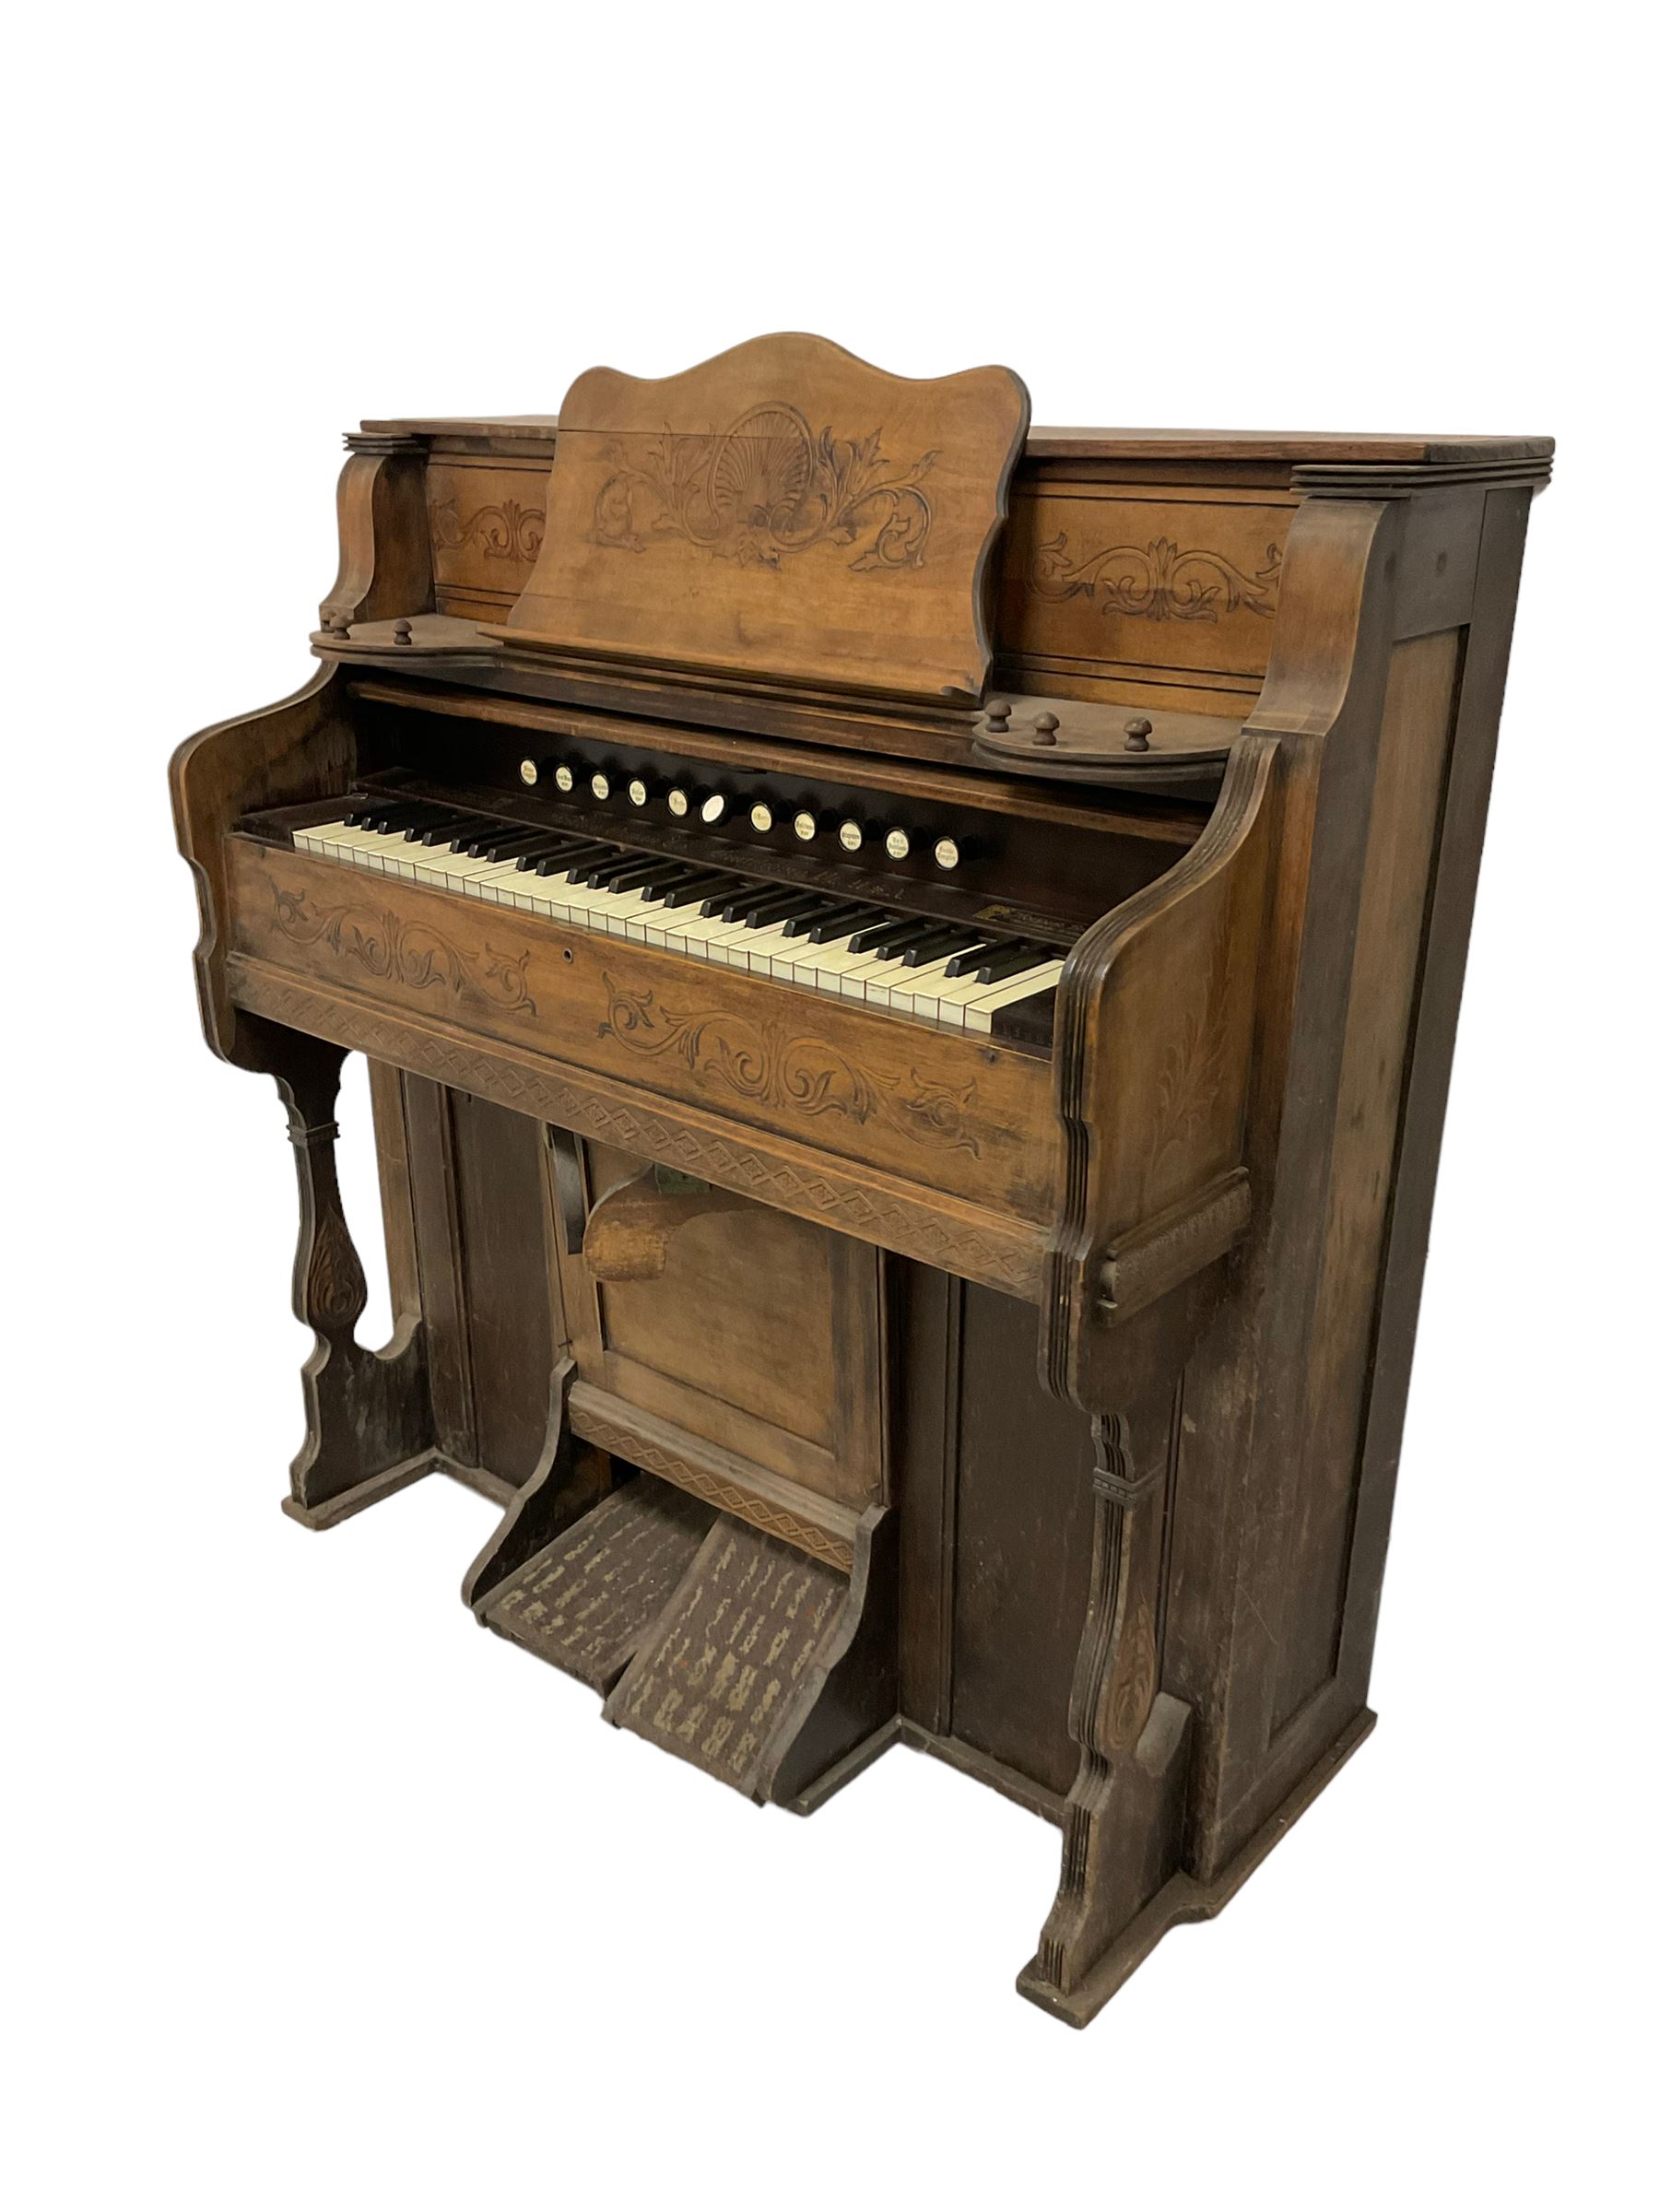 Early 20th century walnut cased American organ - Image 4 of 4